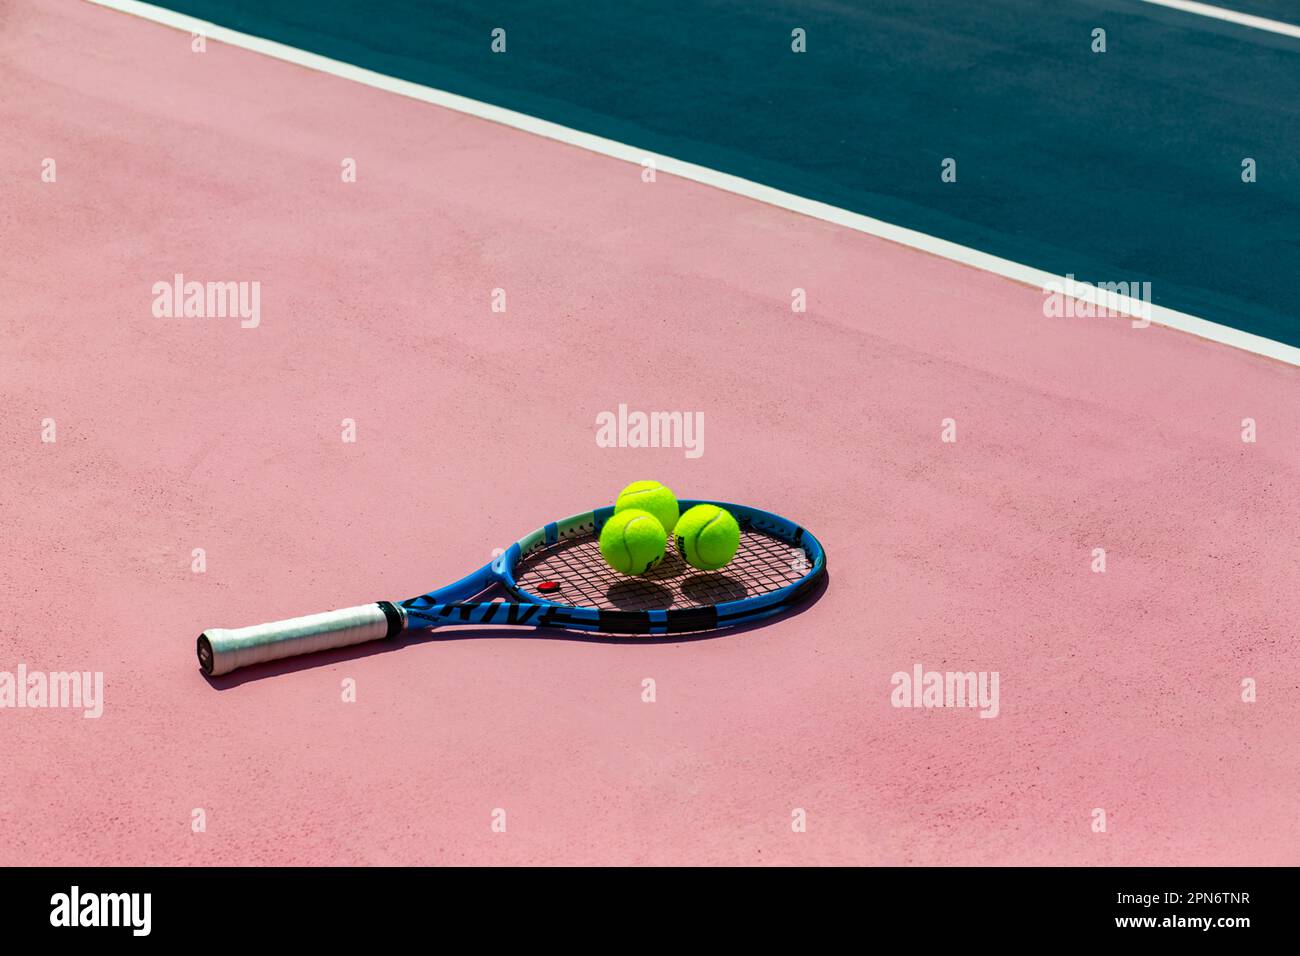 Racchetta da tennis e palle da tennis sui campi da tennis rosa e blu Foto Stock